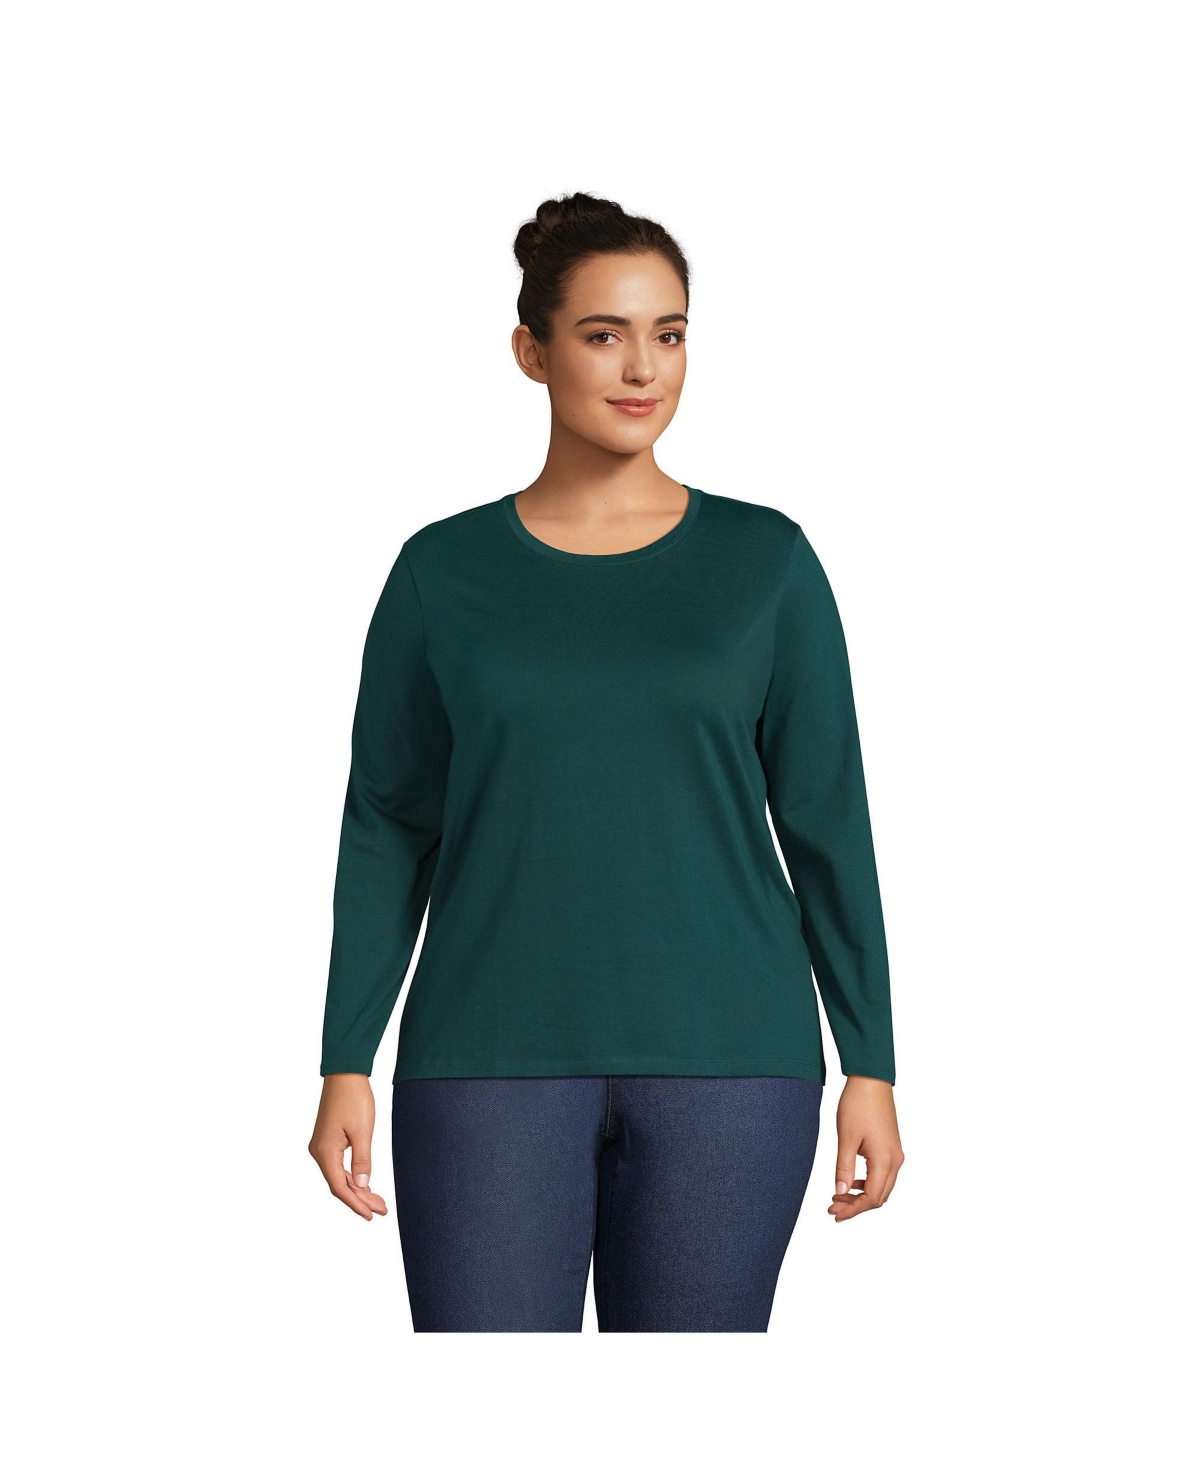 Women's Plus Size Relaxed Supima Cotton Long Sleeve Crewneck T-Shirt - Deep balsam